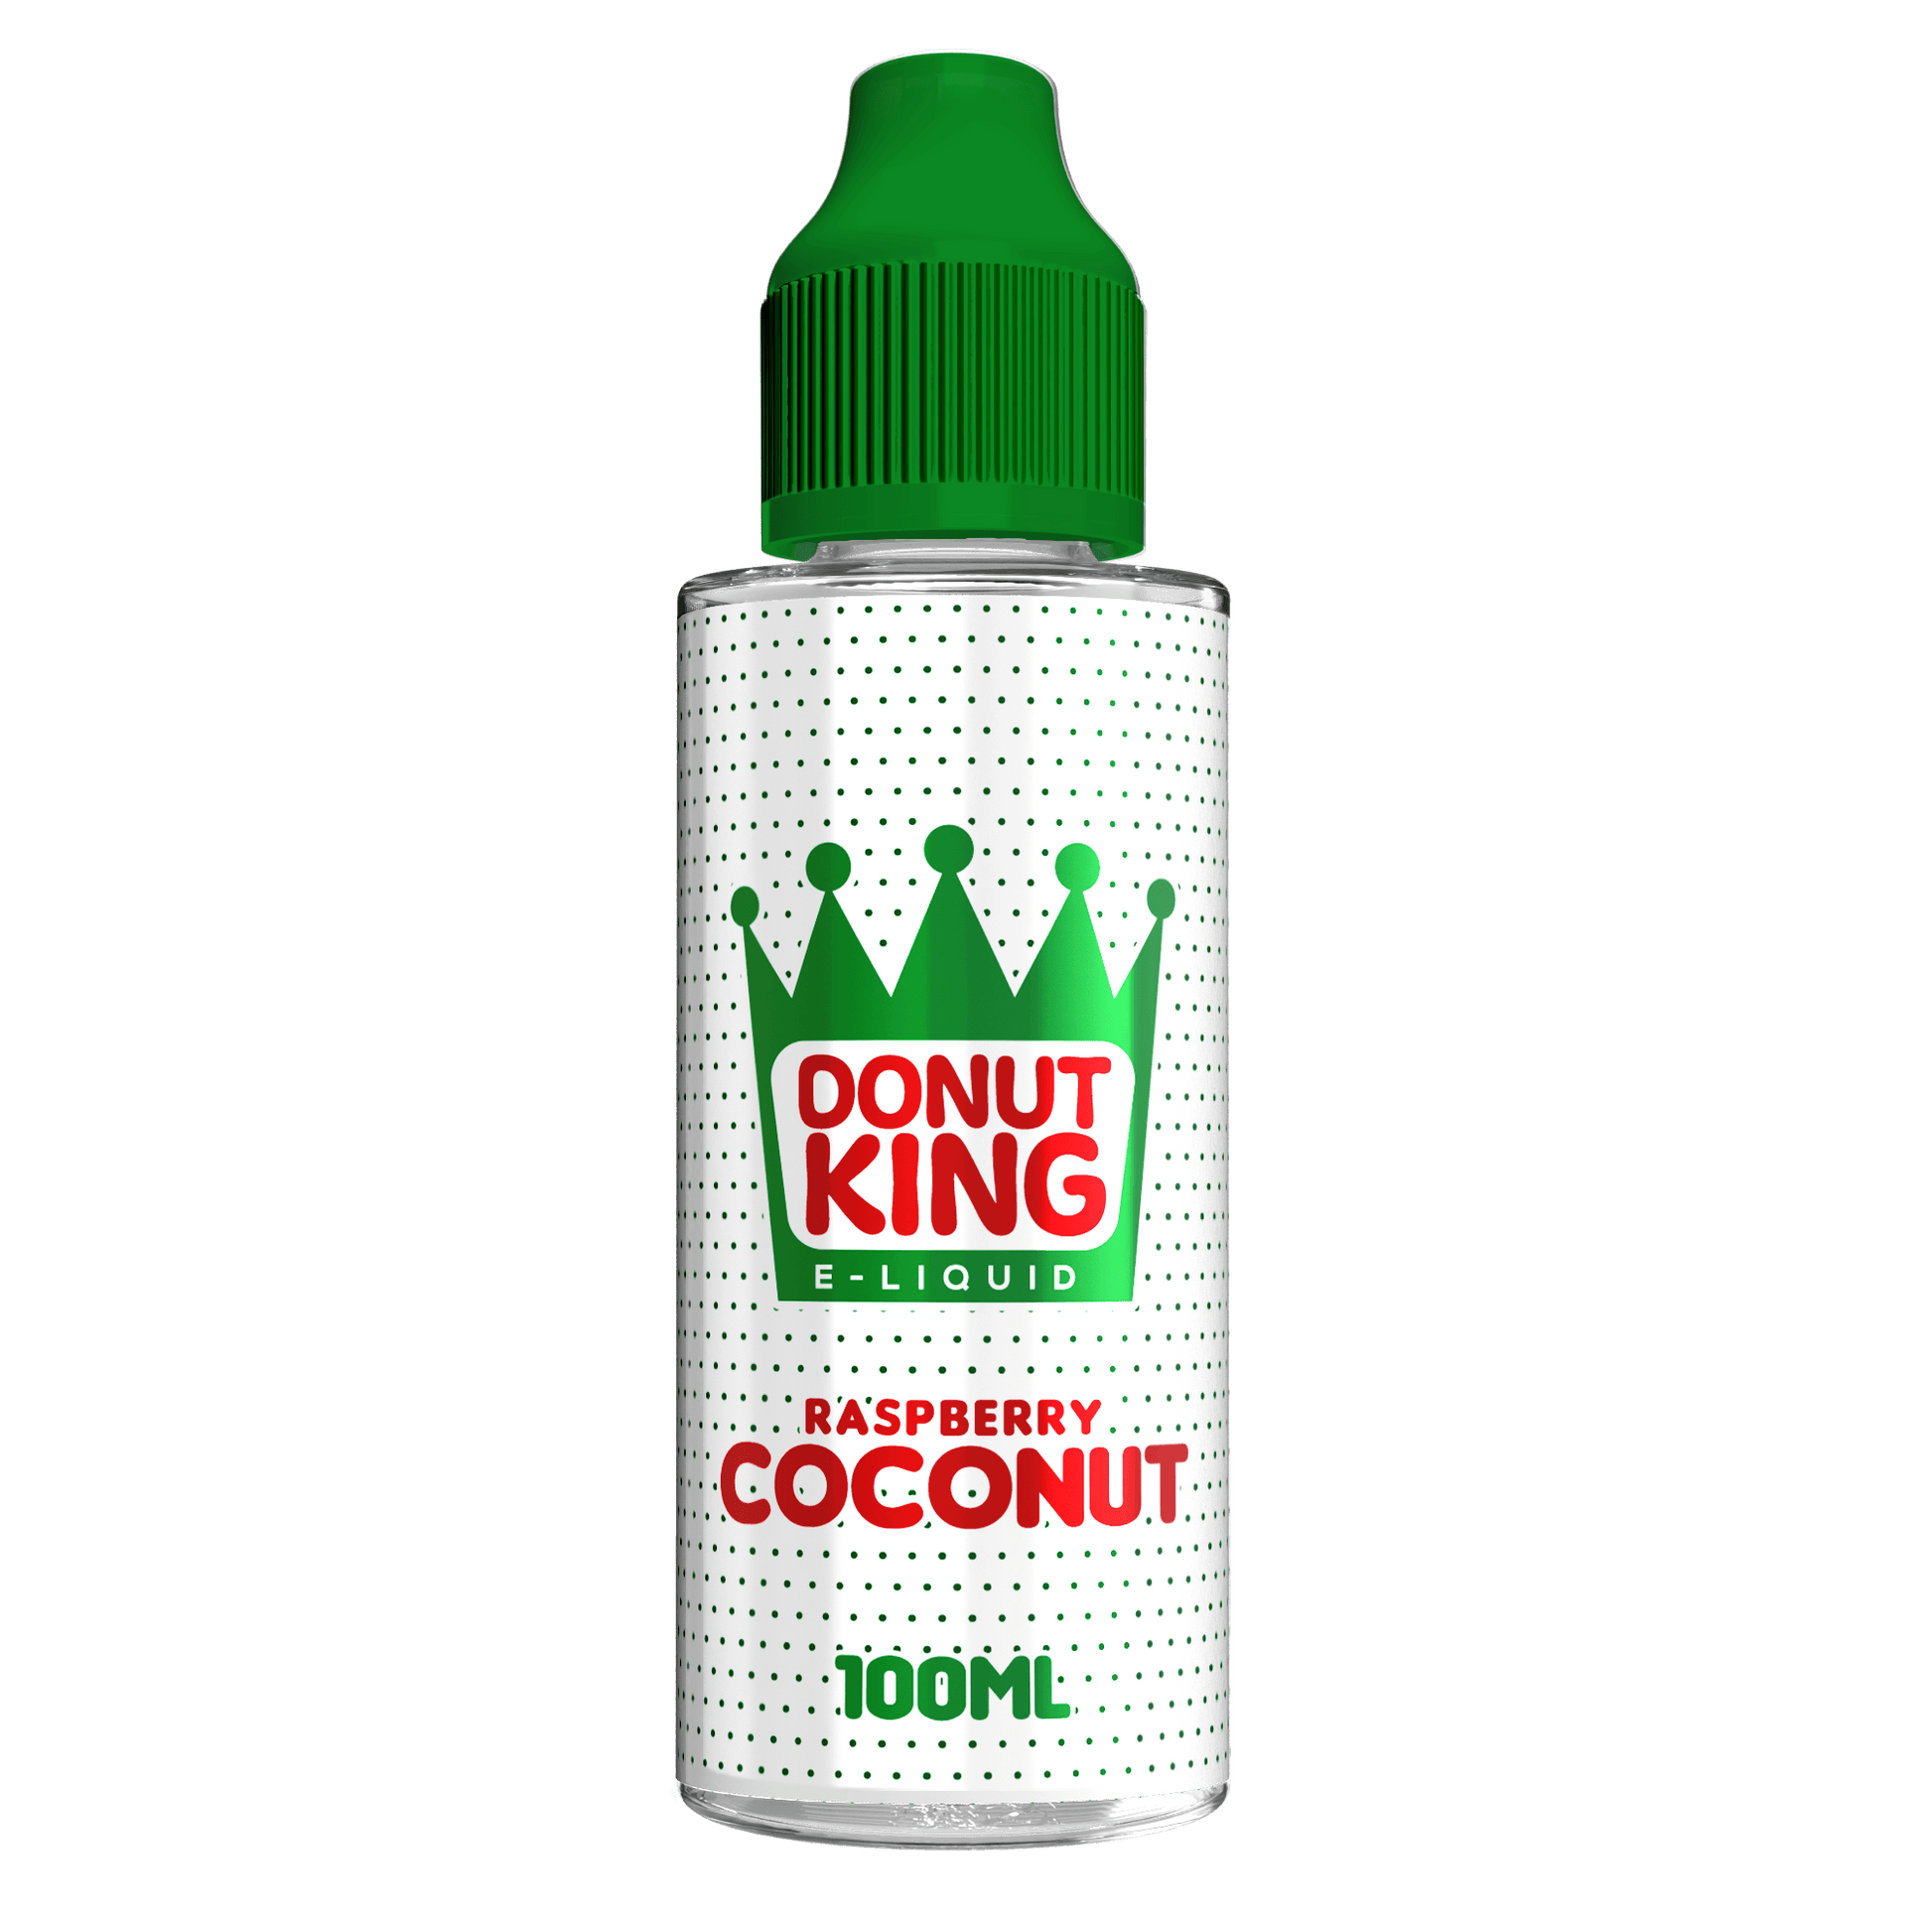 Raspberry Coconut E-Liquid by Donut King